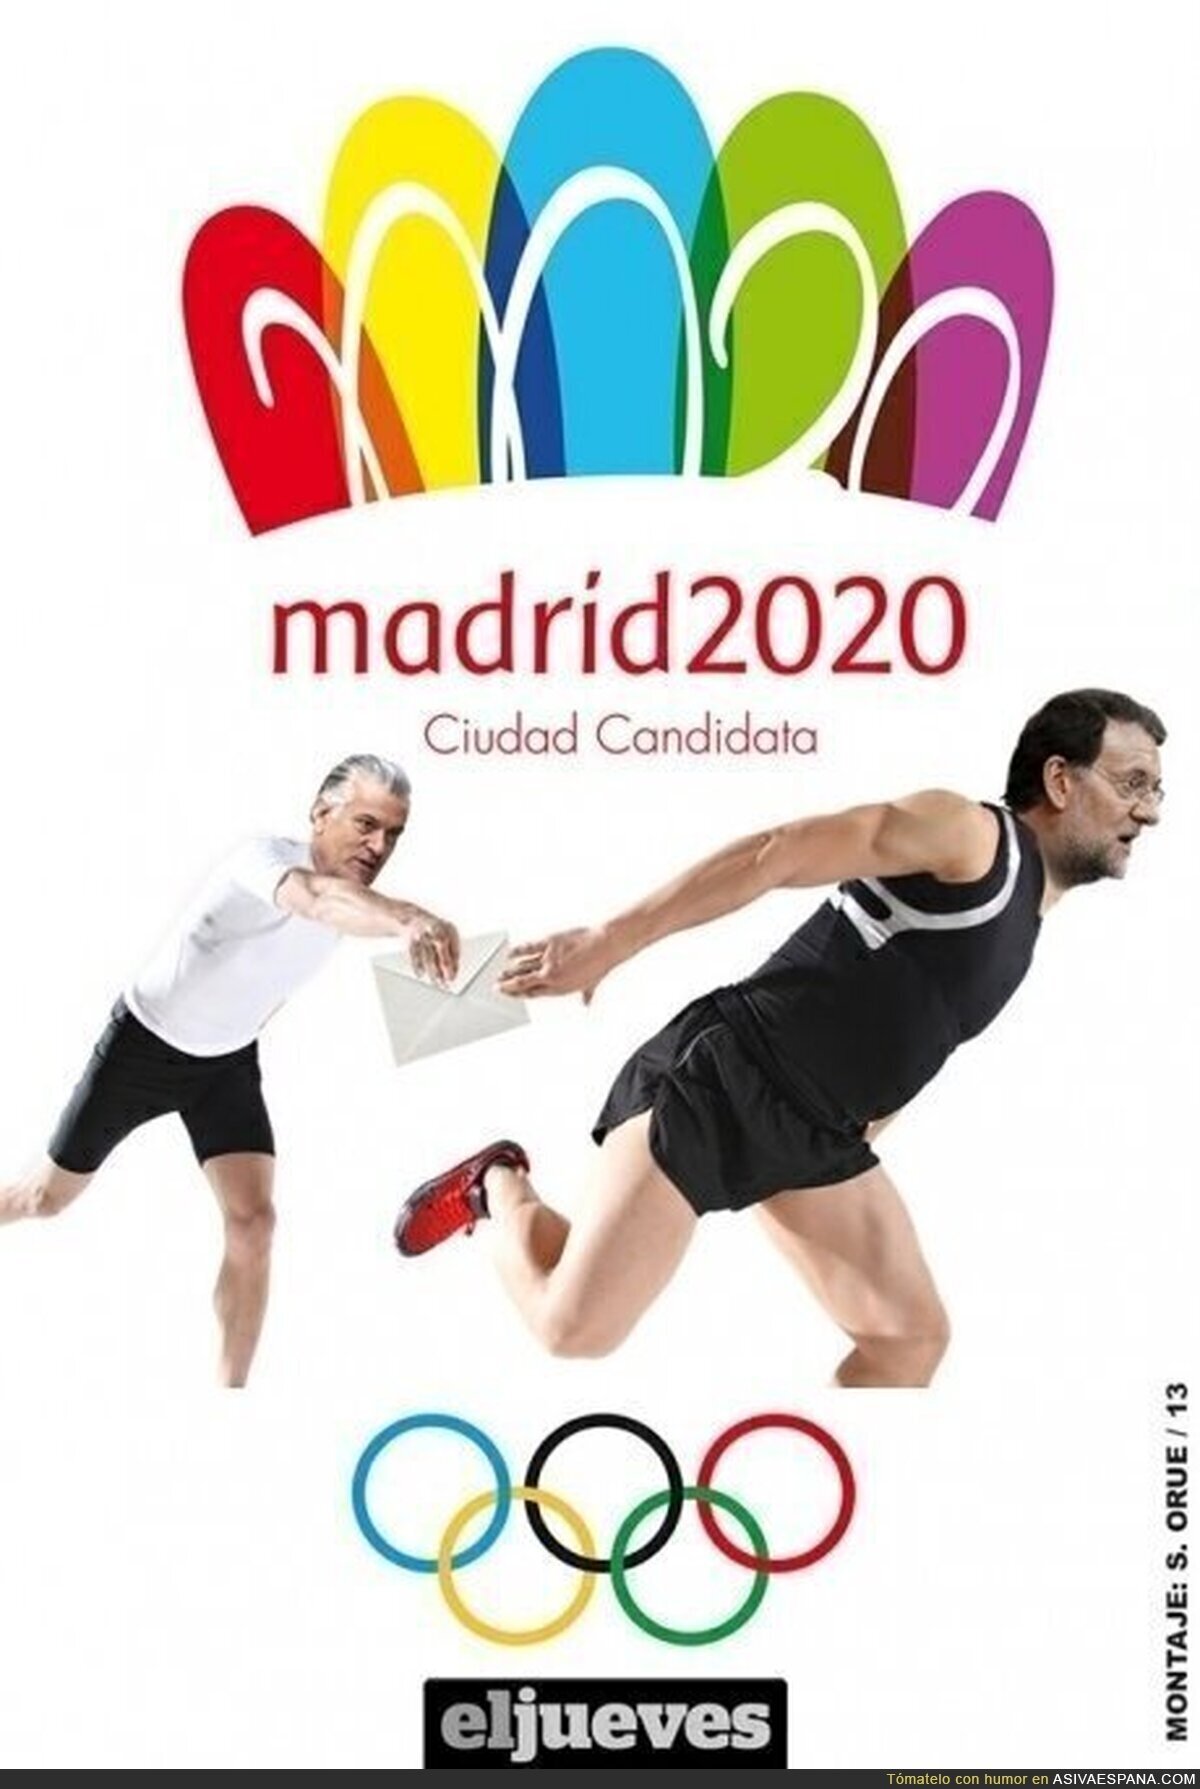 MADRID 2020 - Firme candidata a los JJOO